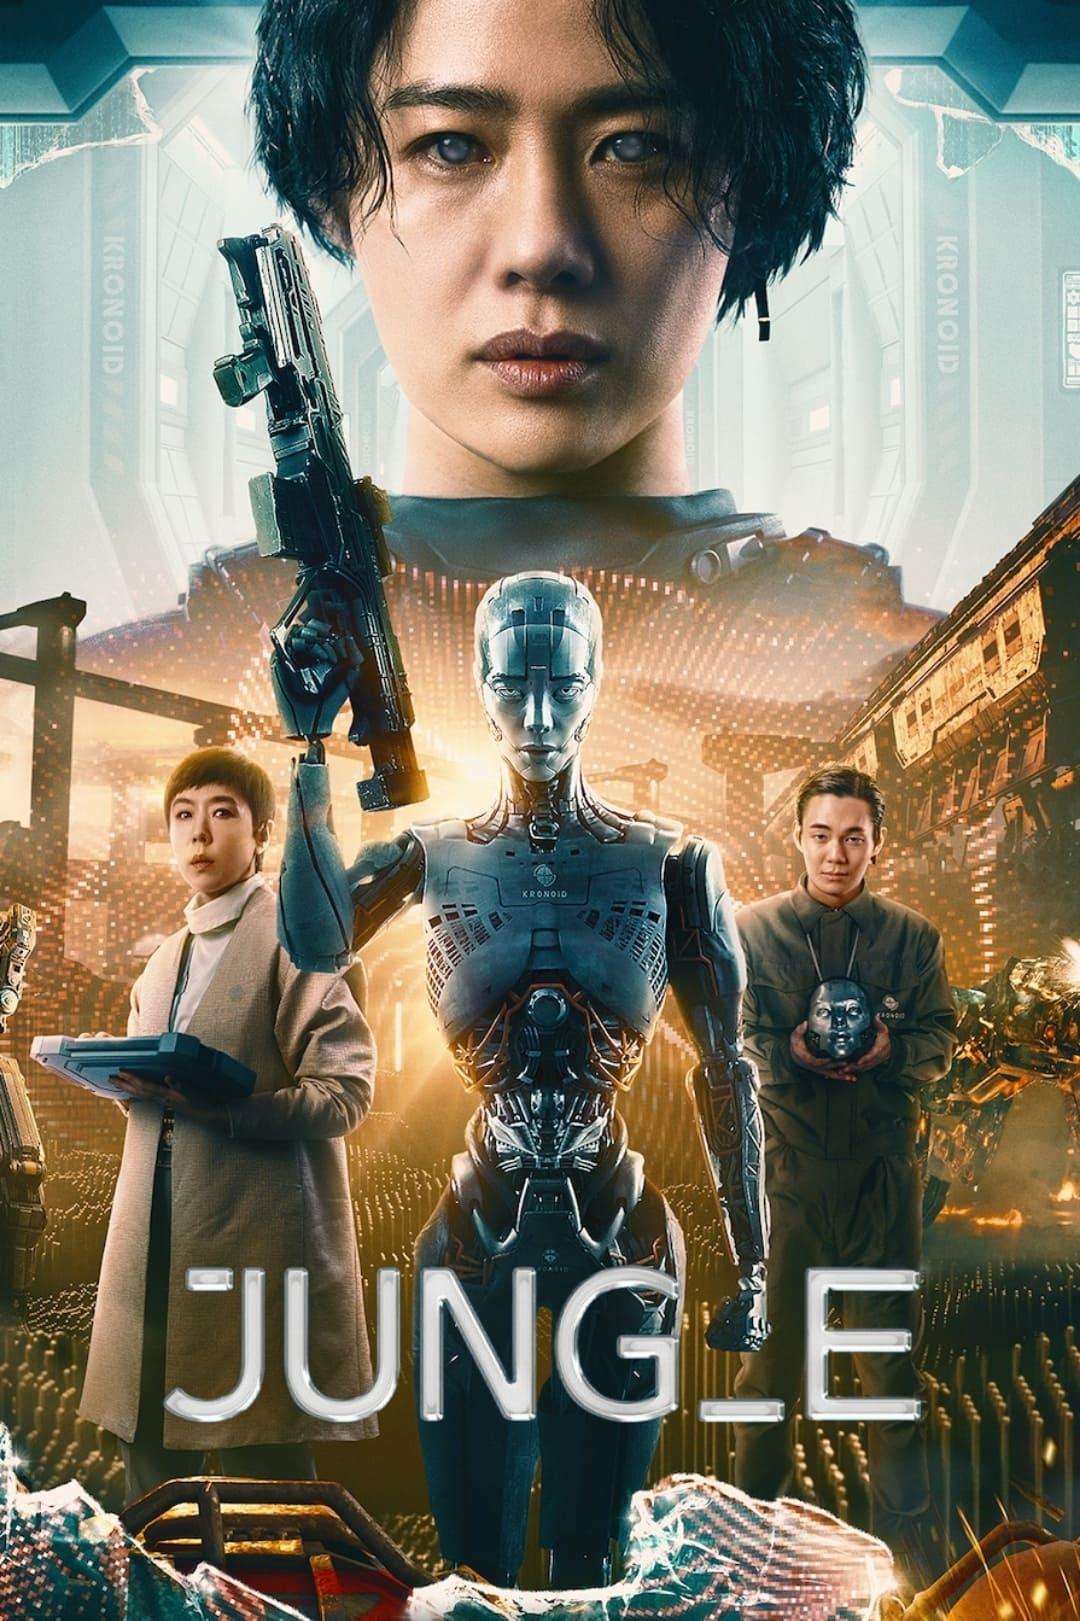 JUNG_E poster